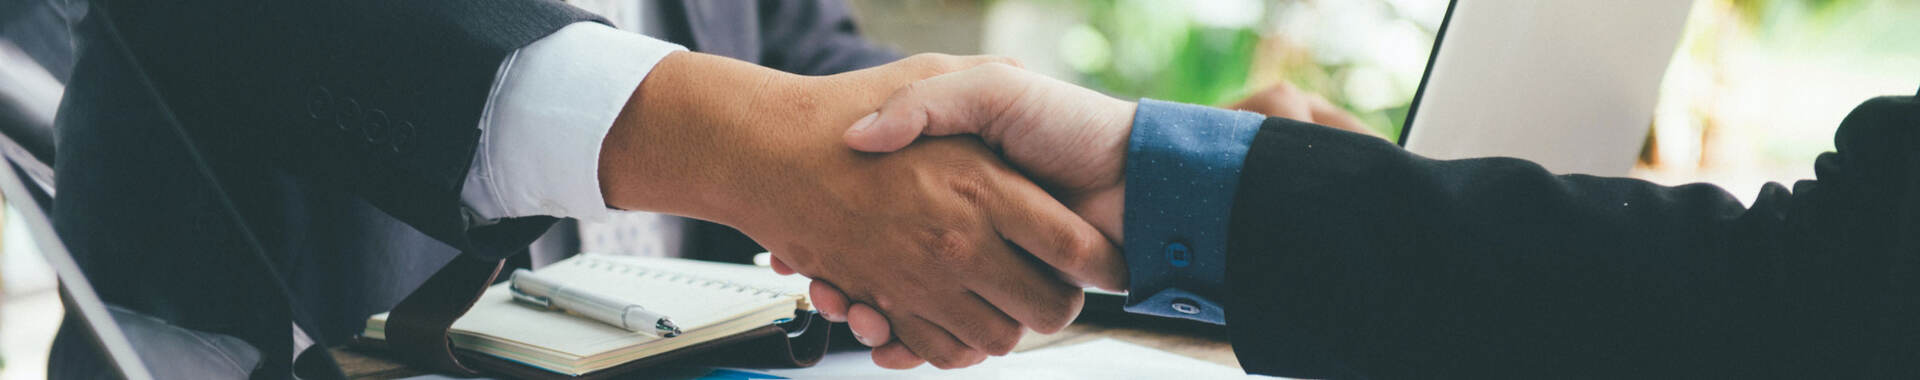 Business people shaking hands across a desk